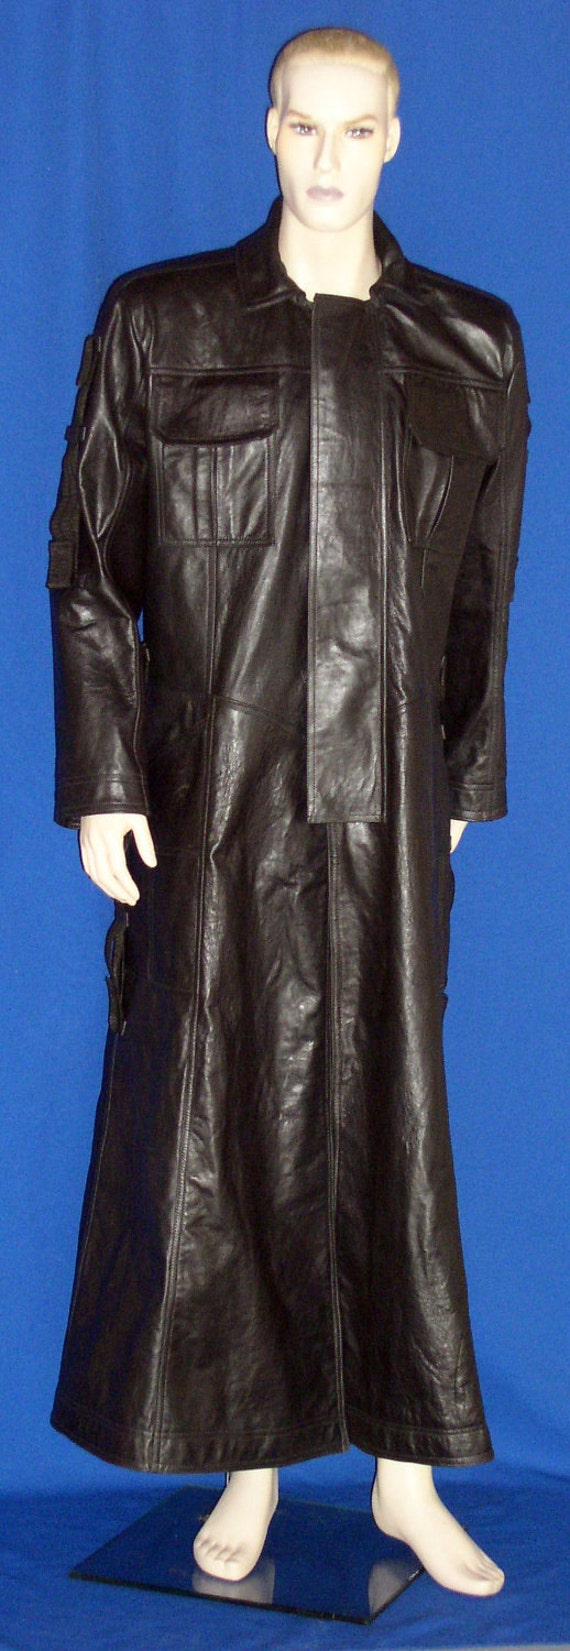 The Punisher Thomas Jane Trench Coat Prop by magicwardrobe on Etsy